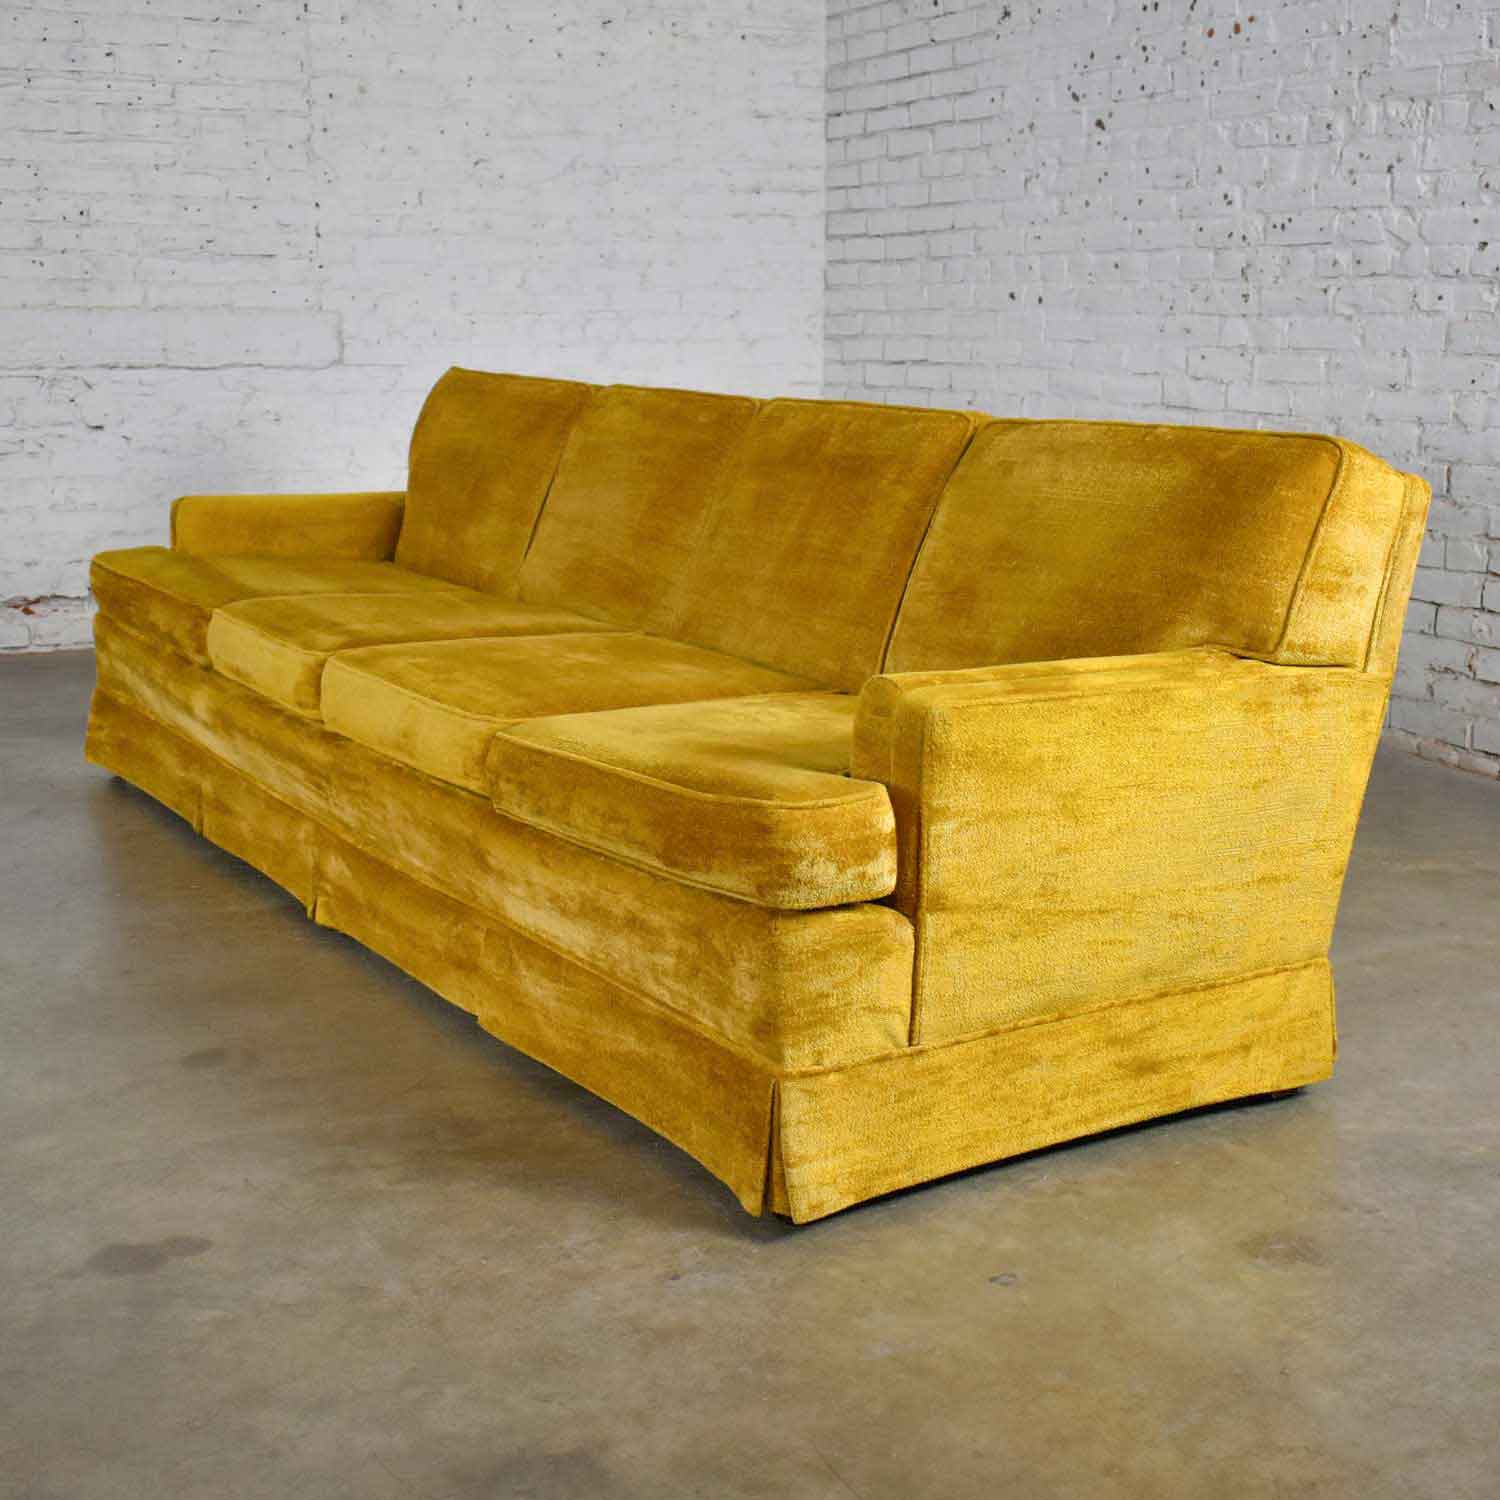 MCM Lawson Style 4 Cushion Gold Velvet Sofa Park Slope Collection Abraham & Straus